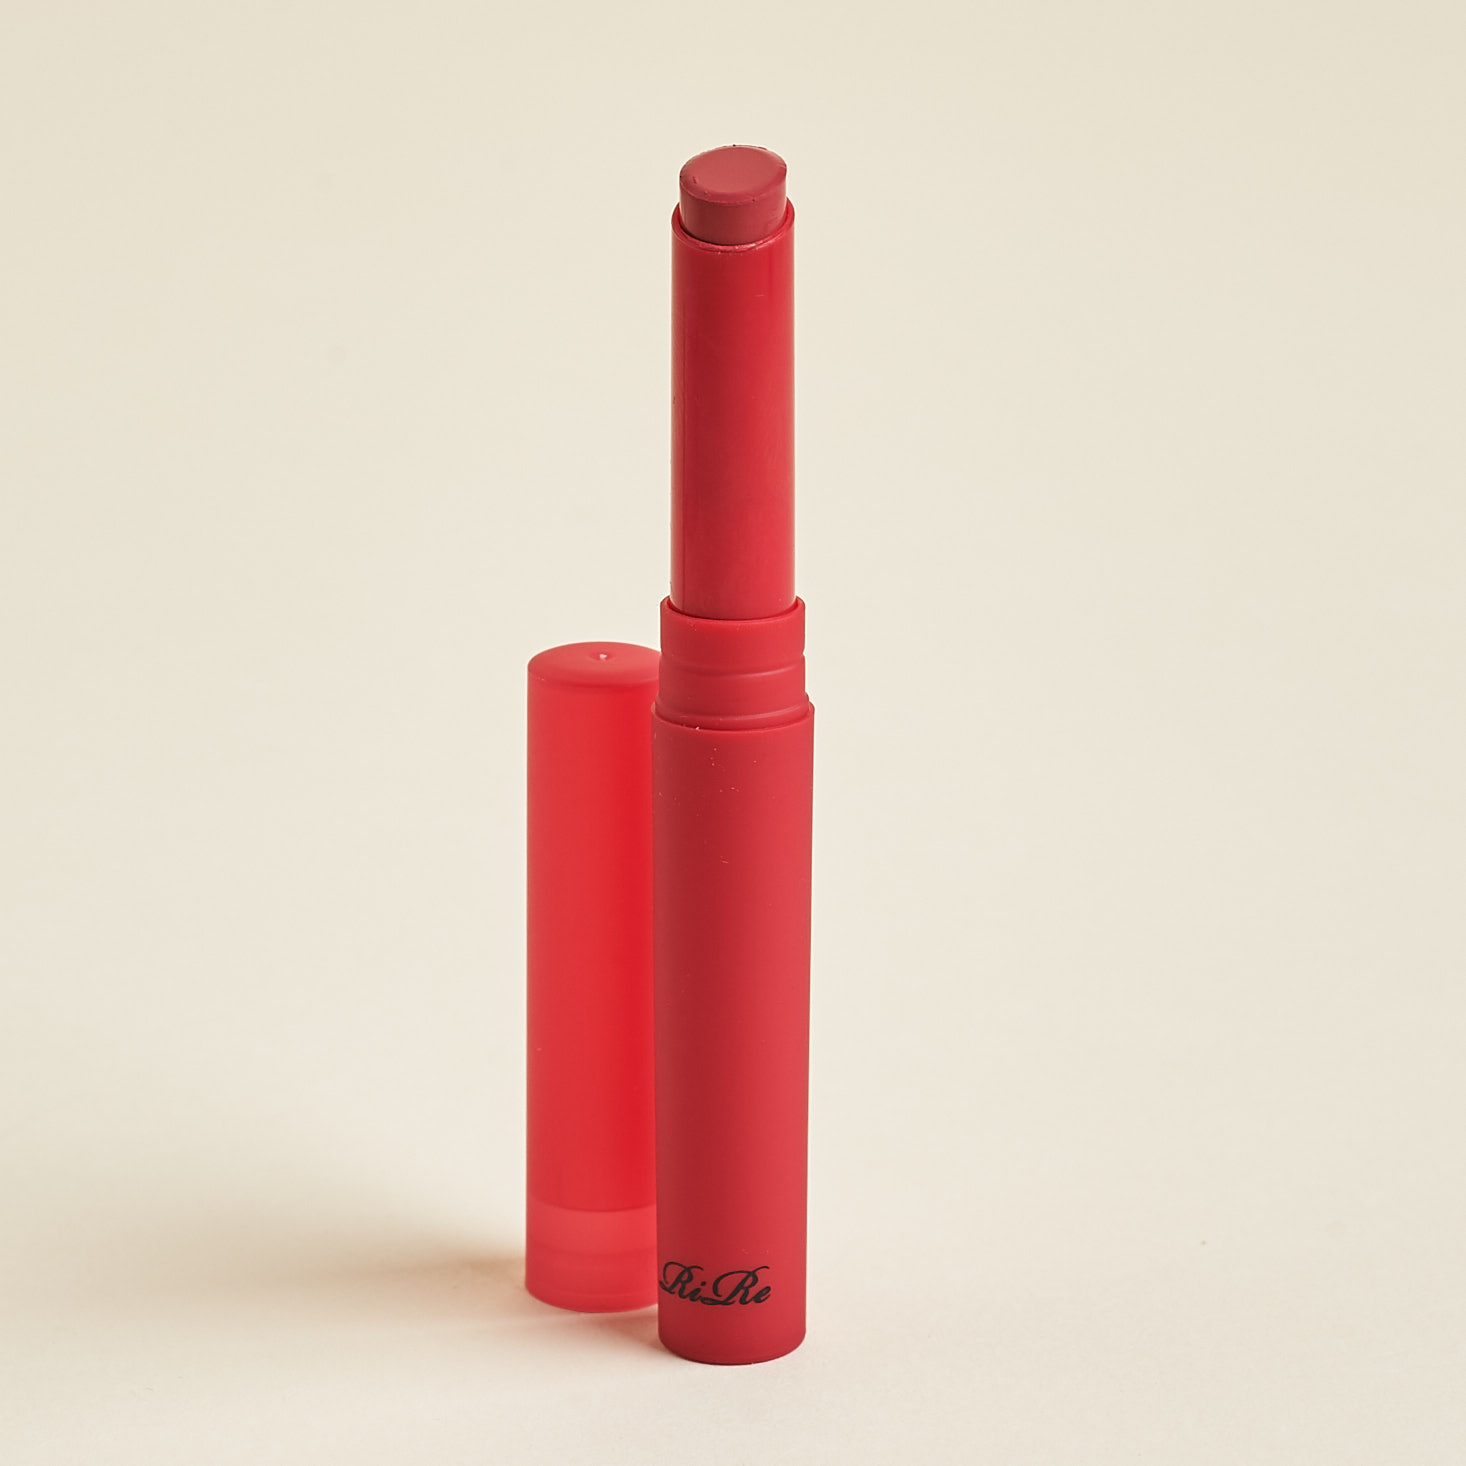 Open RiRe Air-Fit Velvet Lipstick in L01